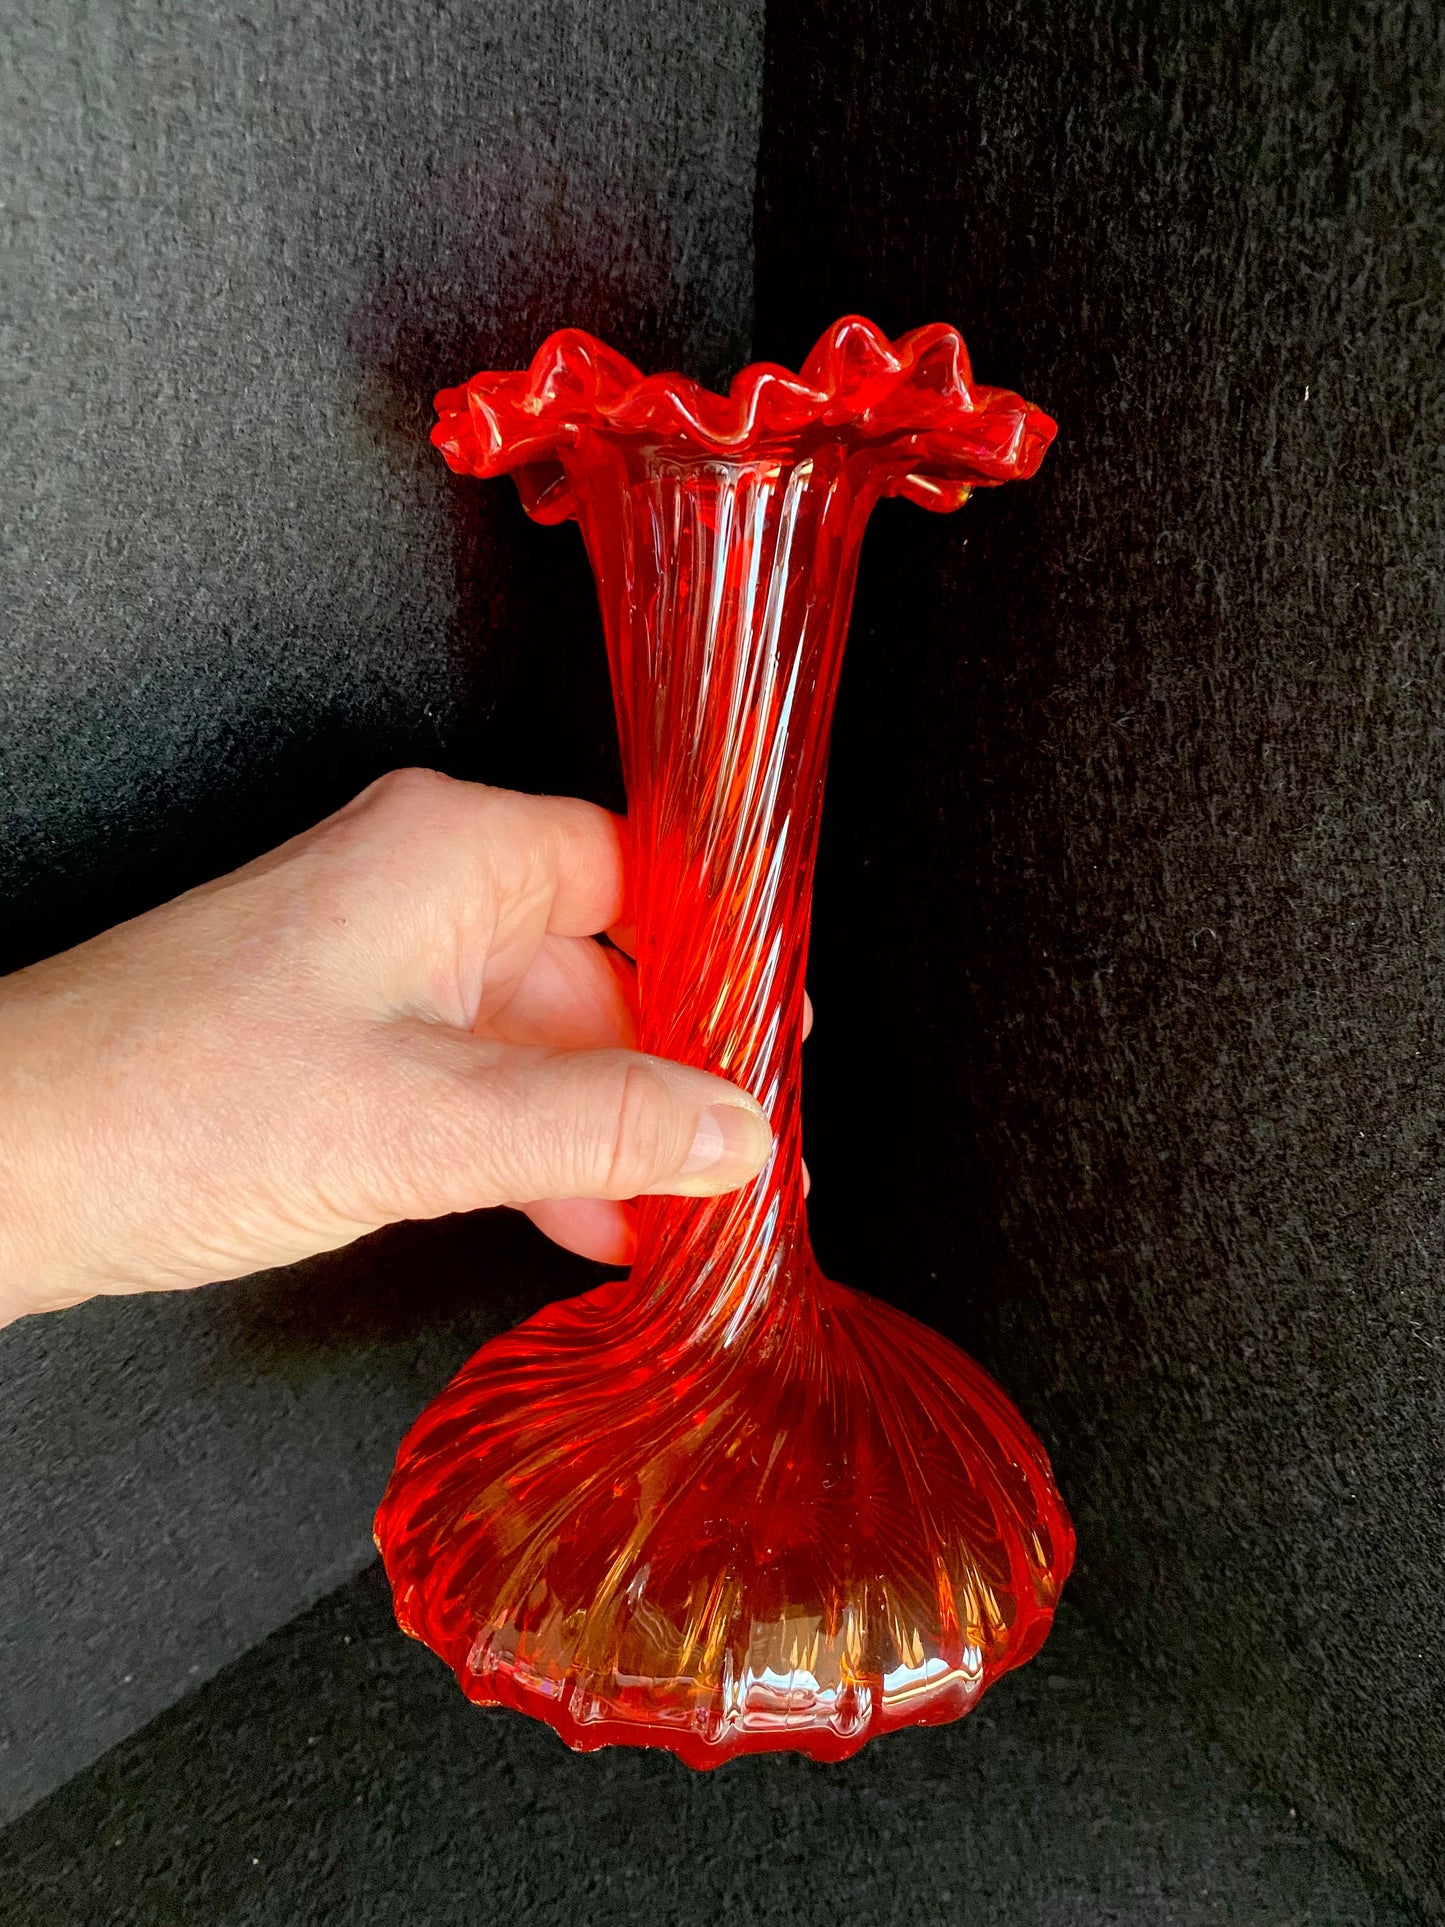 Amberina swirl vase